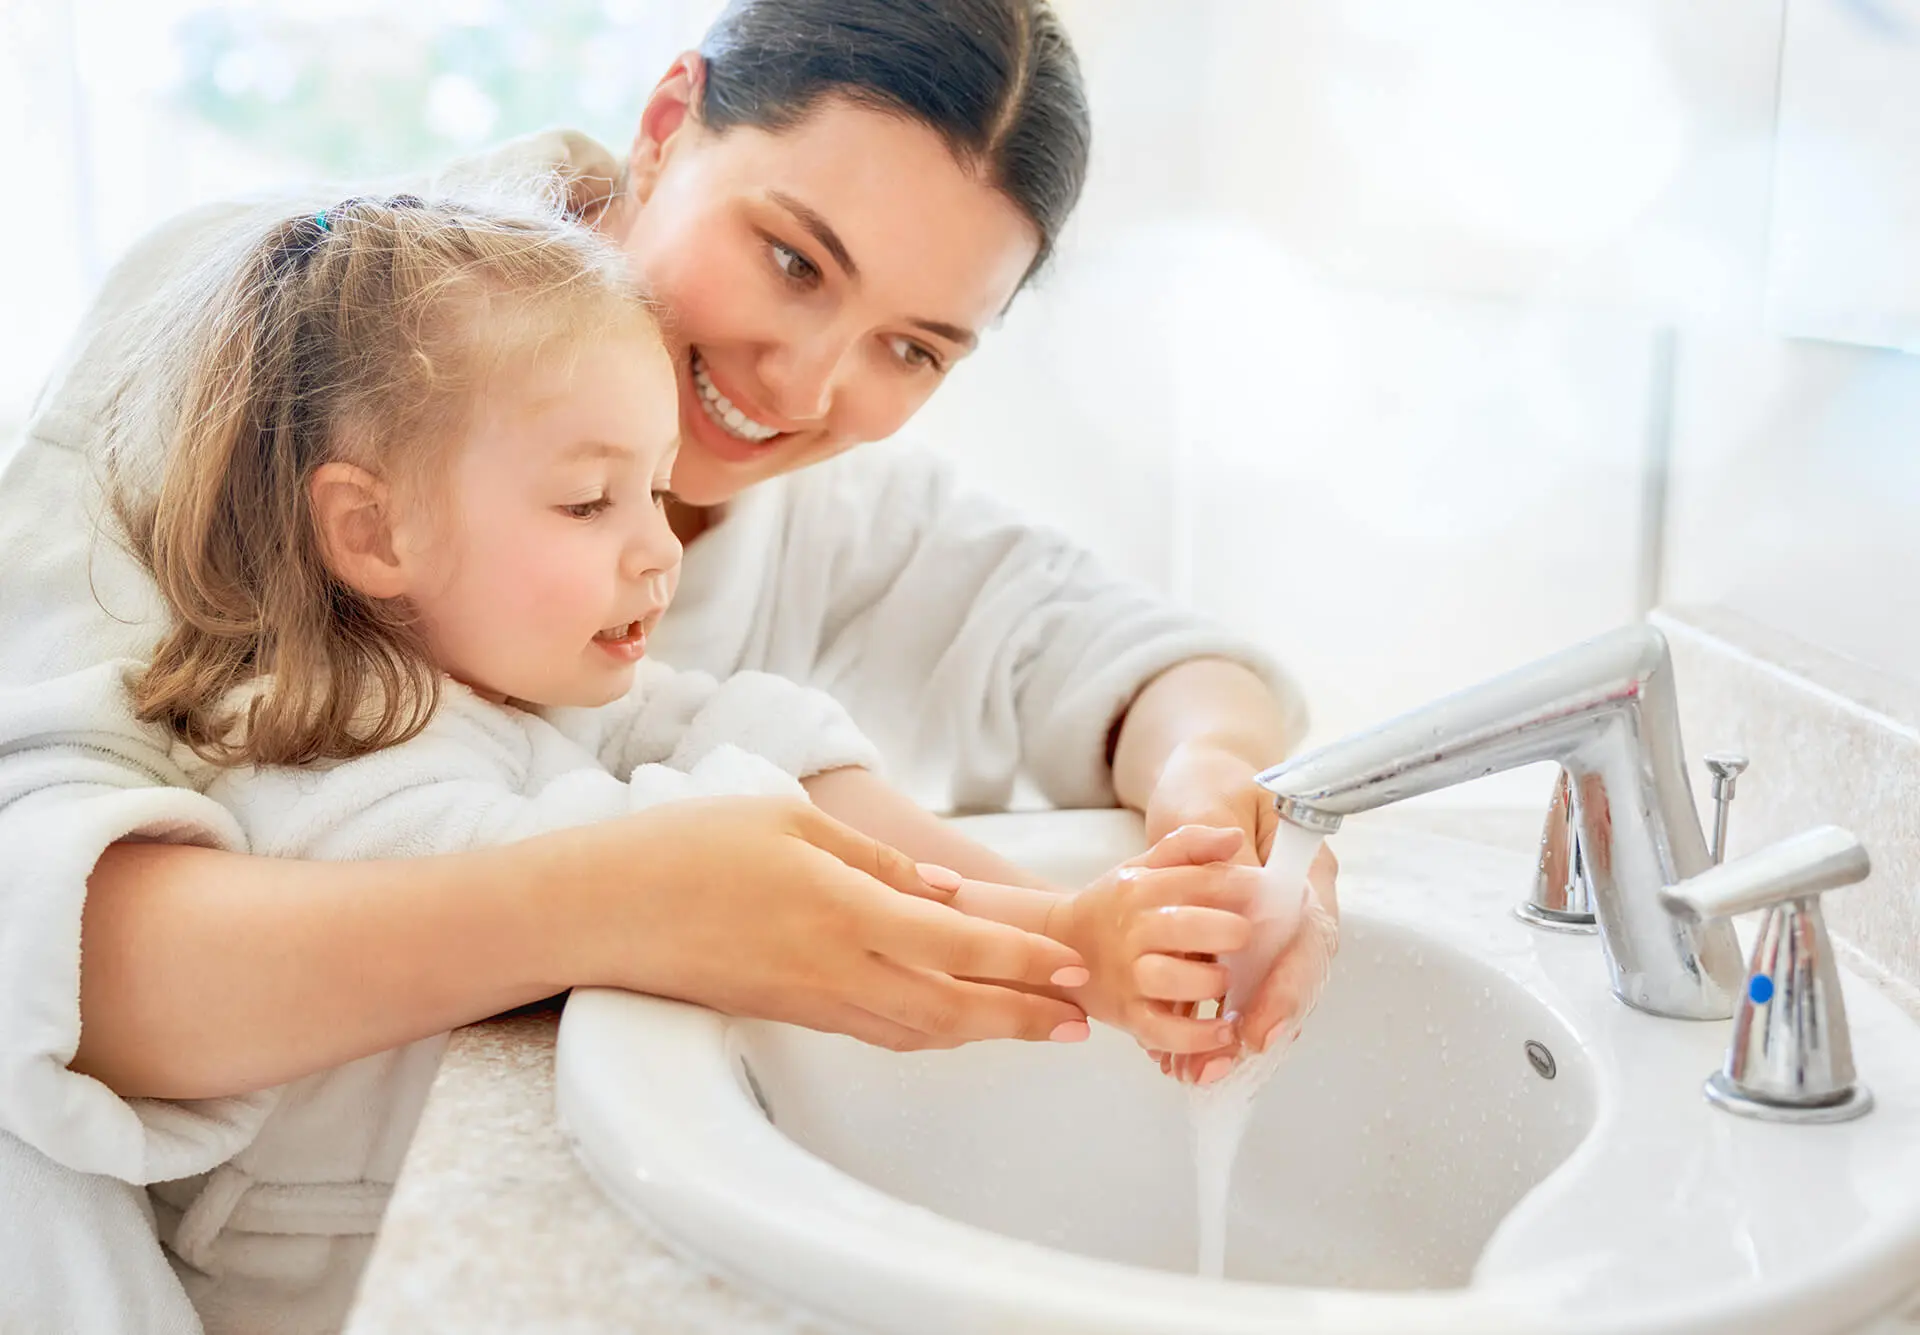 https://mtelizabeth.com/wp-content/uploads/2020/03/girl-and-her-mother-are-washing-hands.jpg.webp